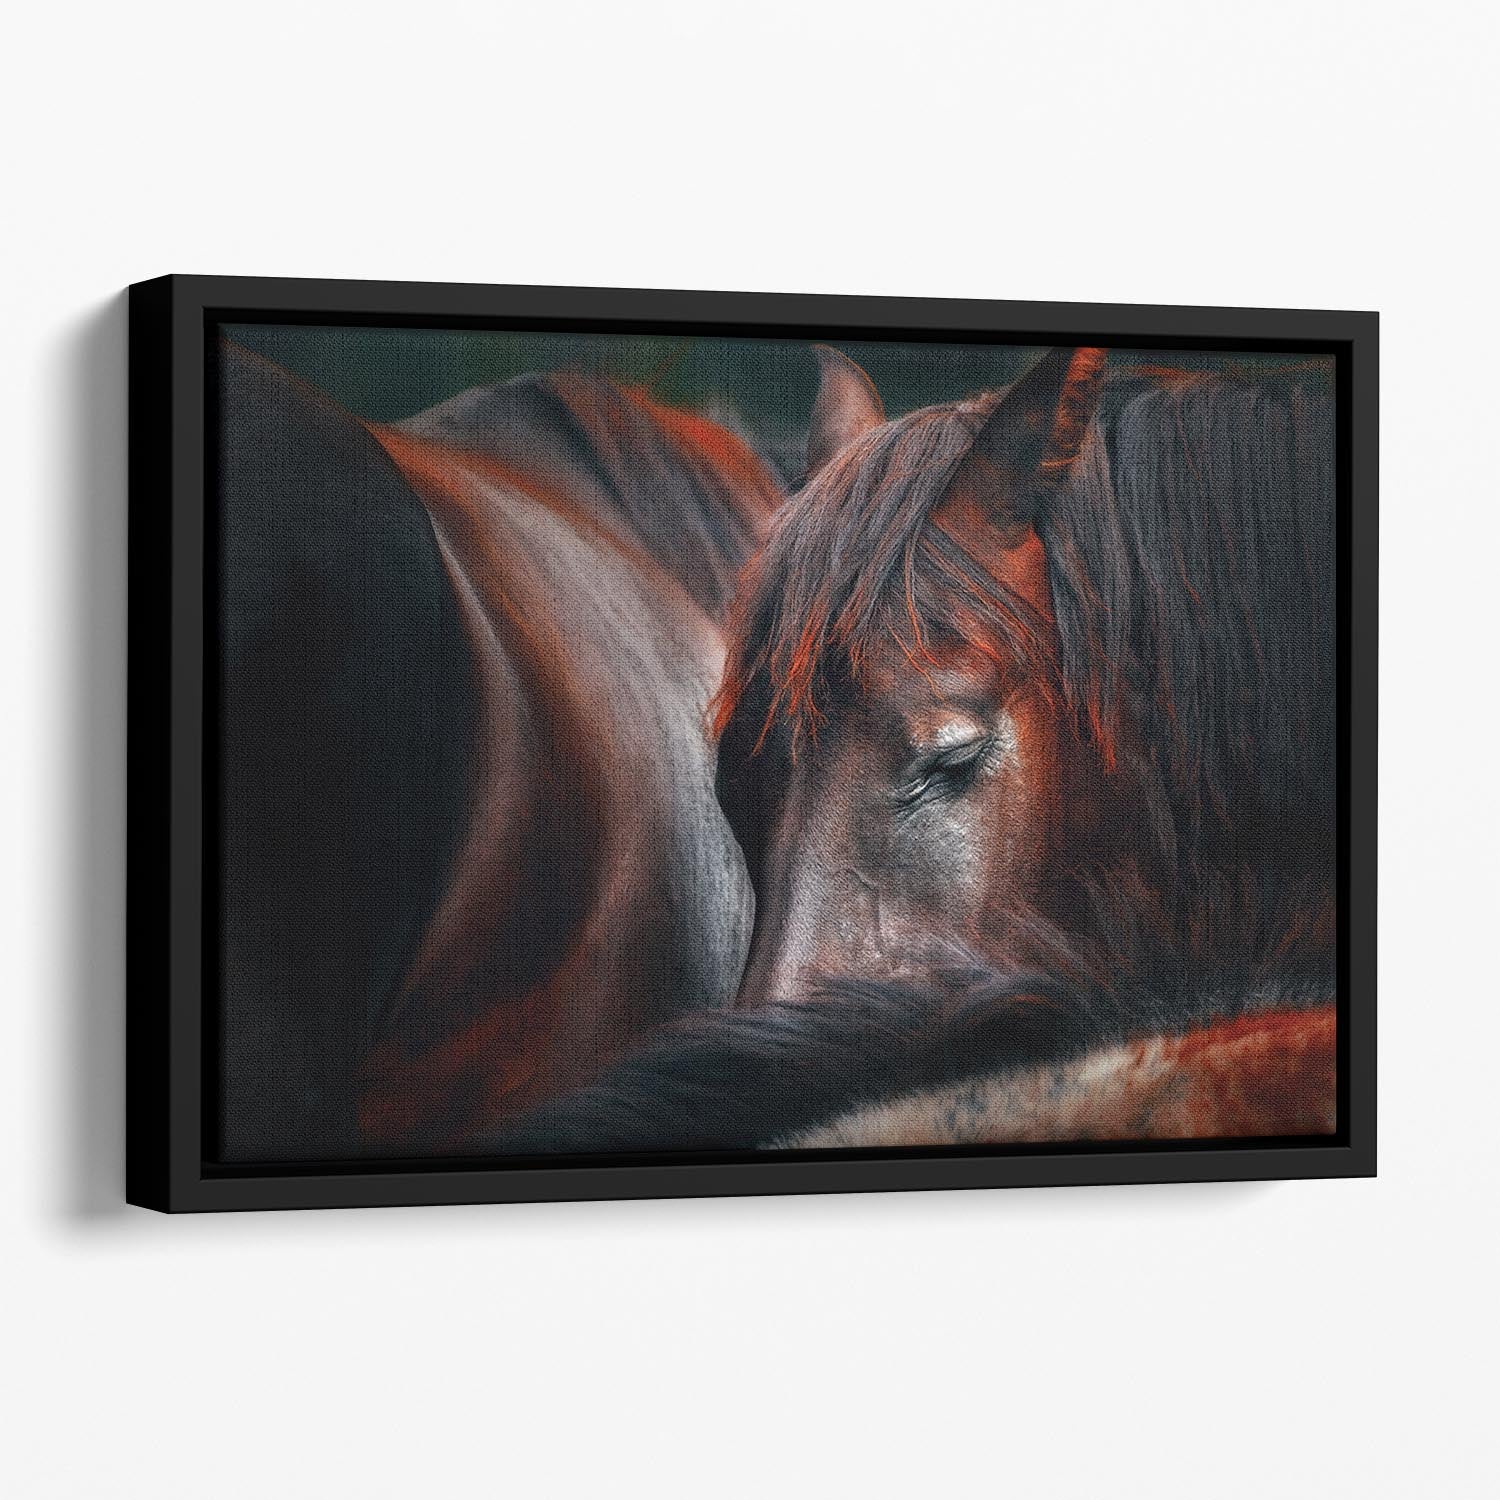 Horses Sleep In A Huddle Floating Framed Canvas - Canvas Art Rocks - 1